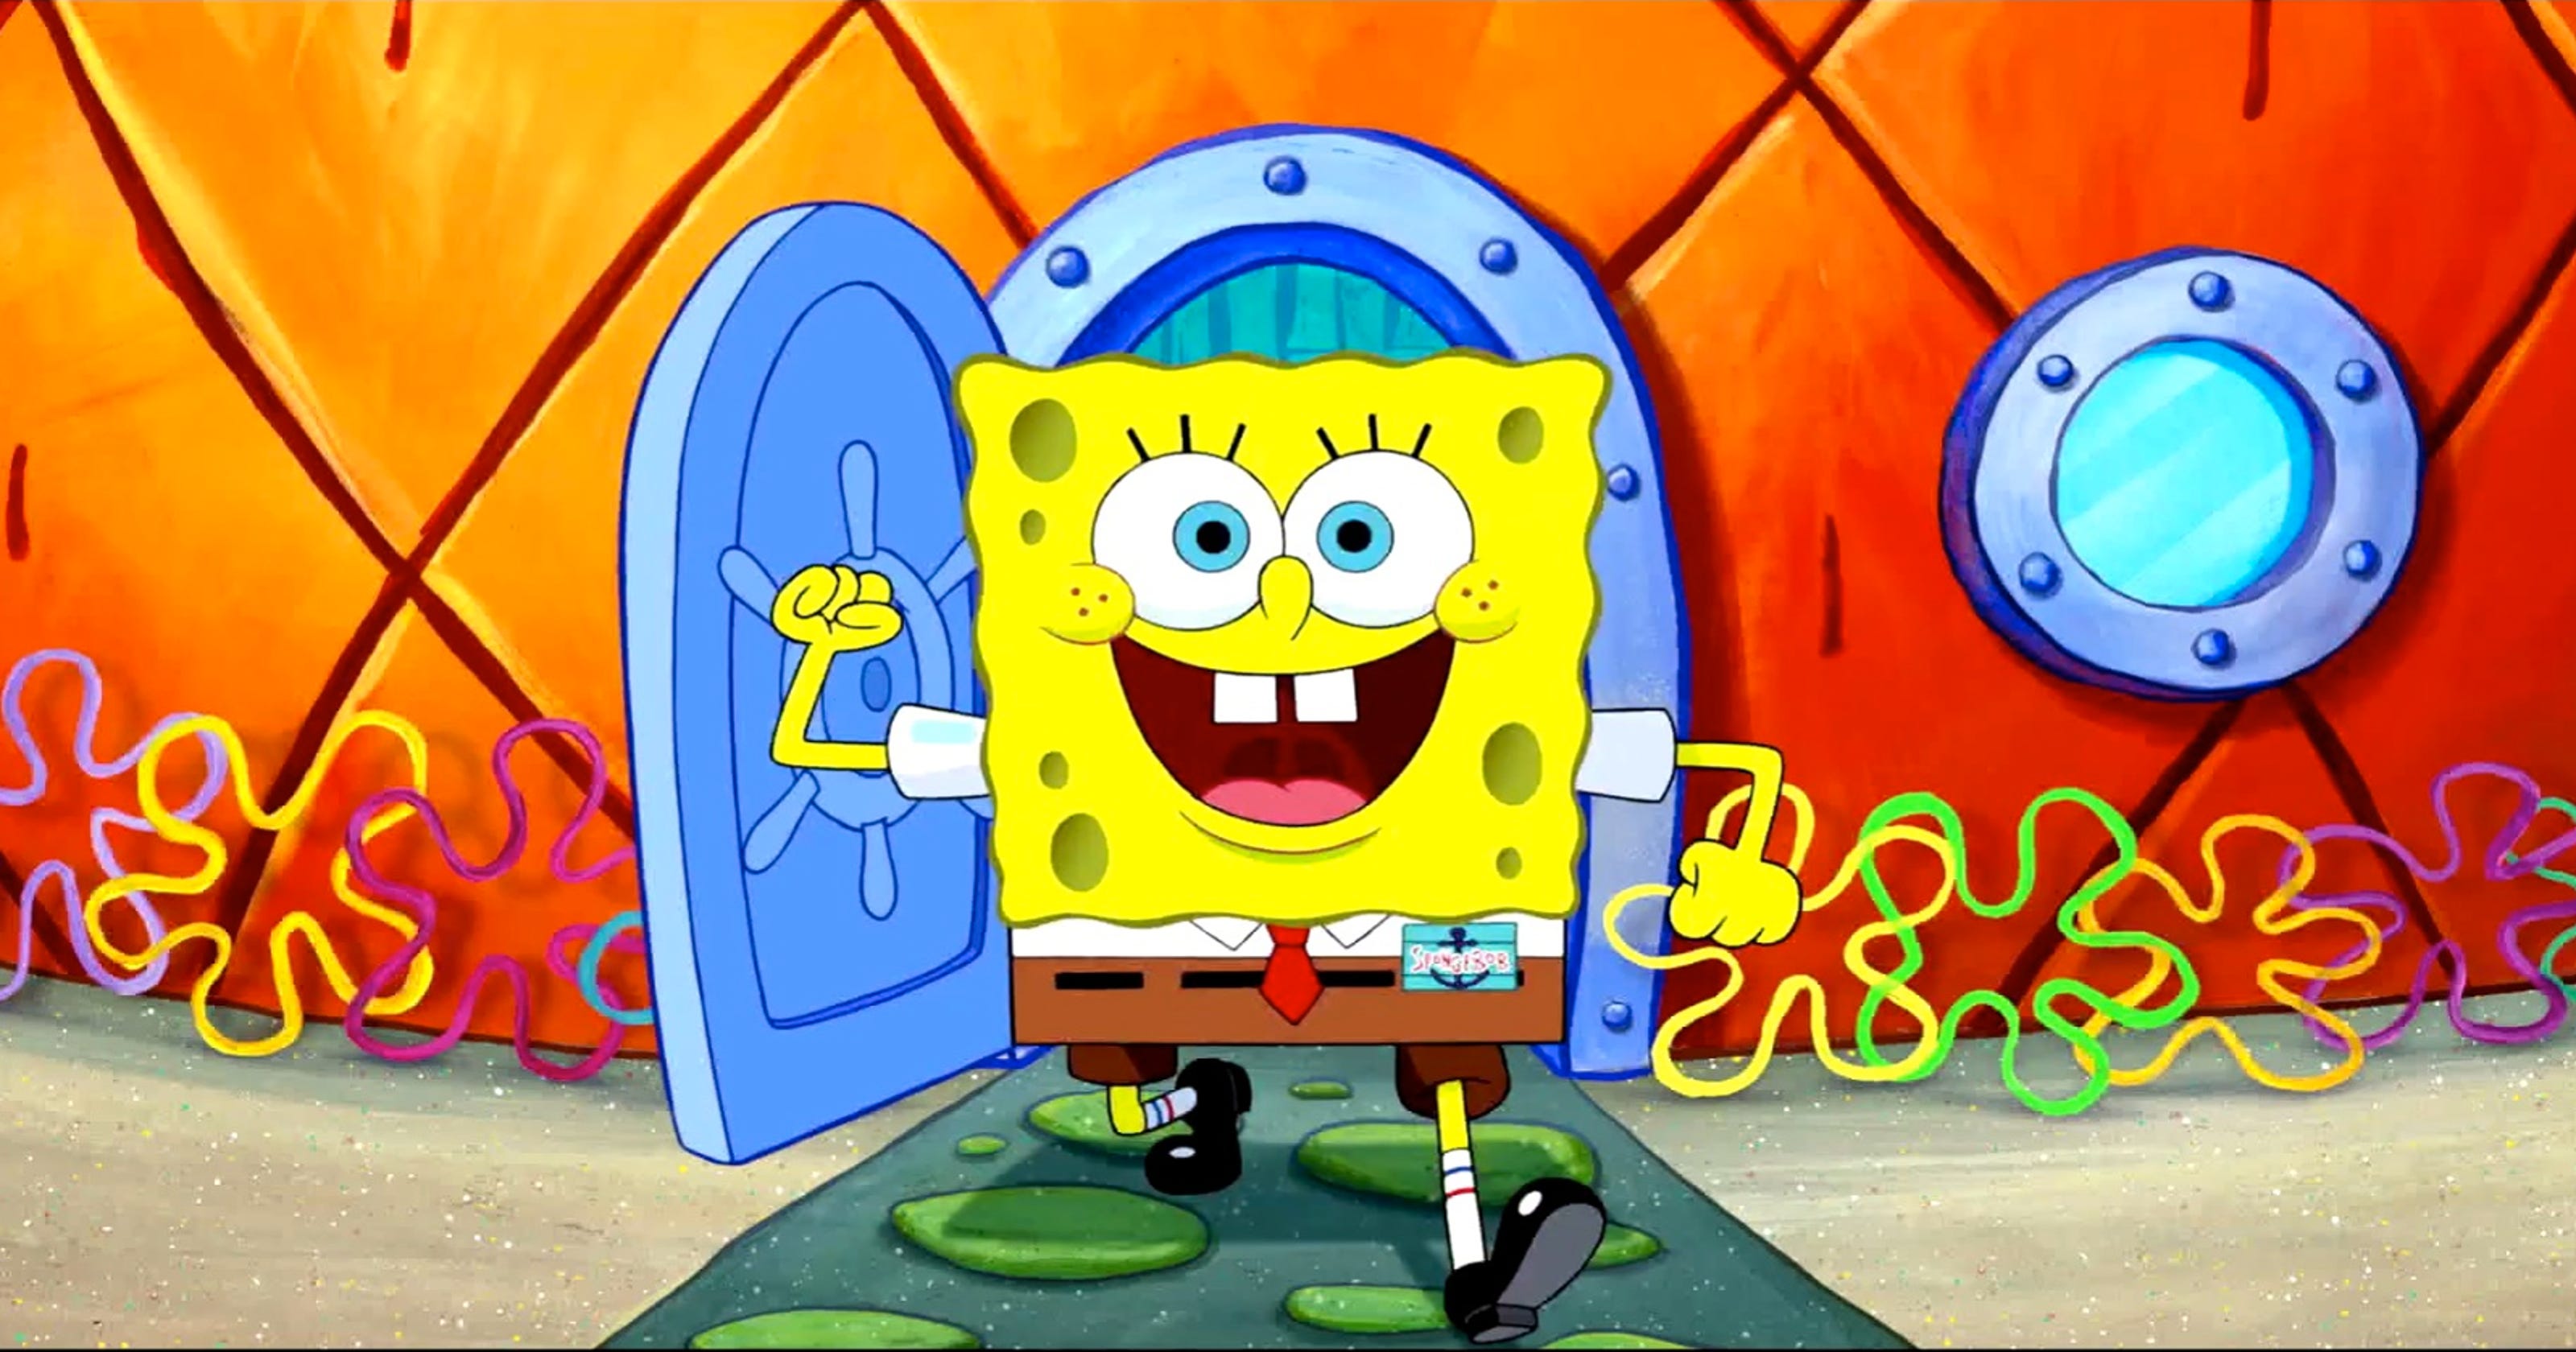 Last episode of spongebob squarepants